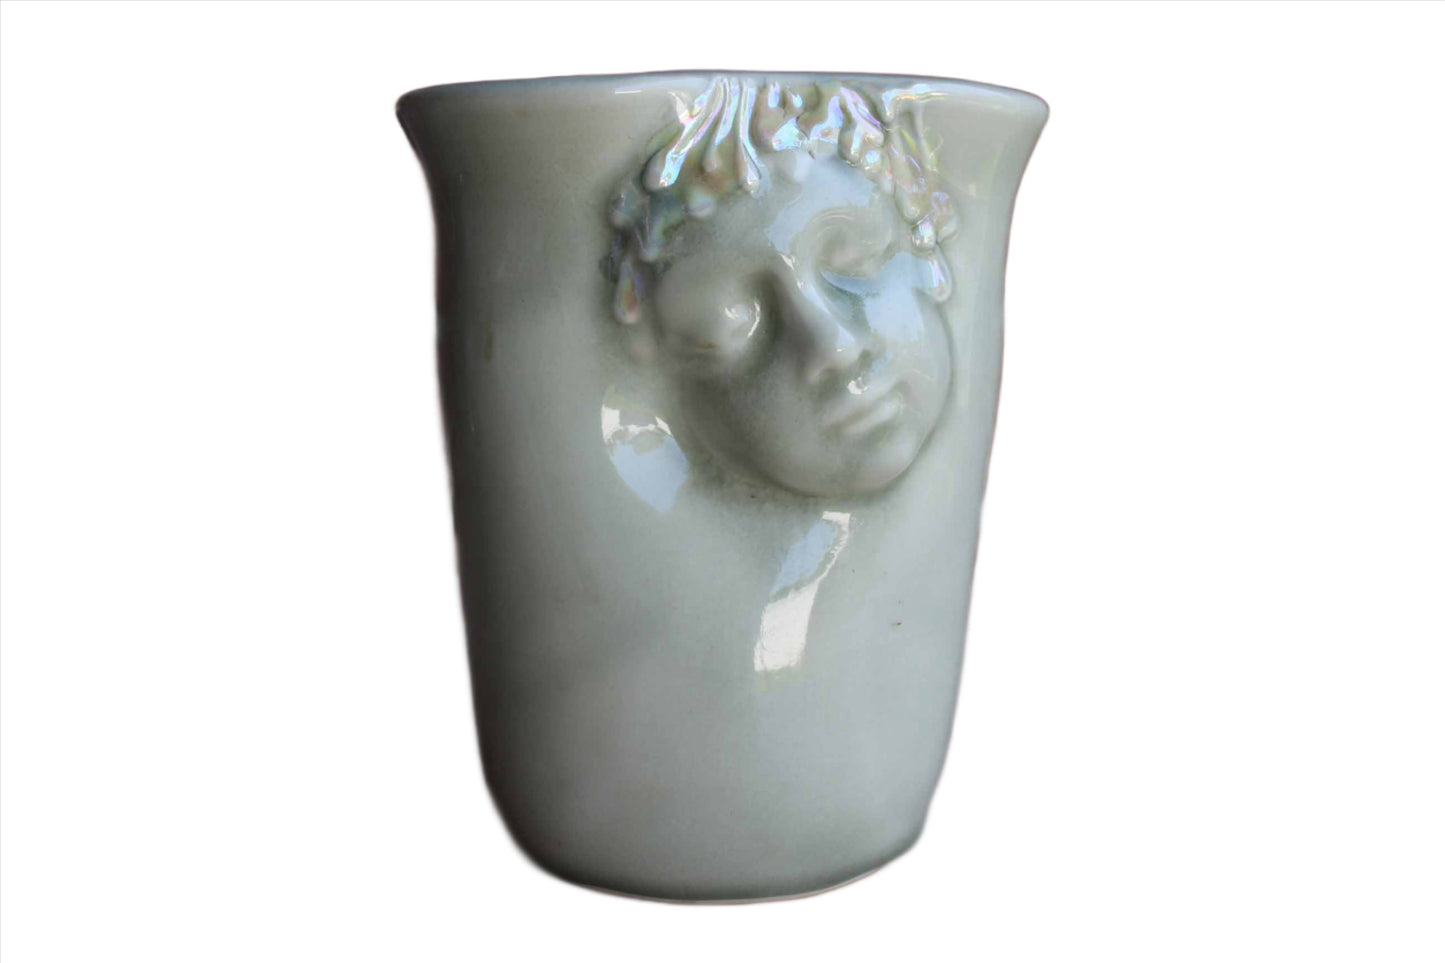 Handmade Stoneware Vase with Restful Face with Iridescent Glaze